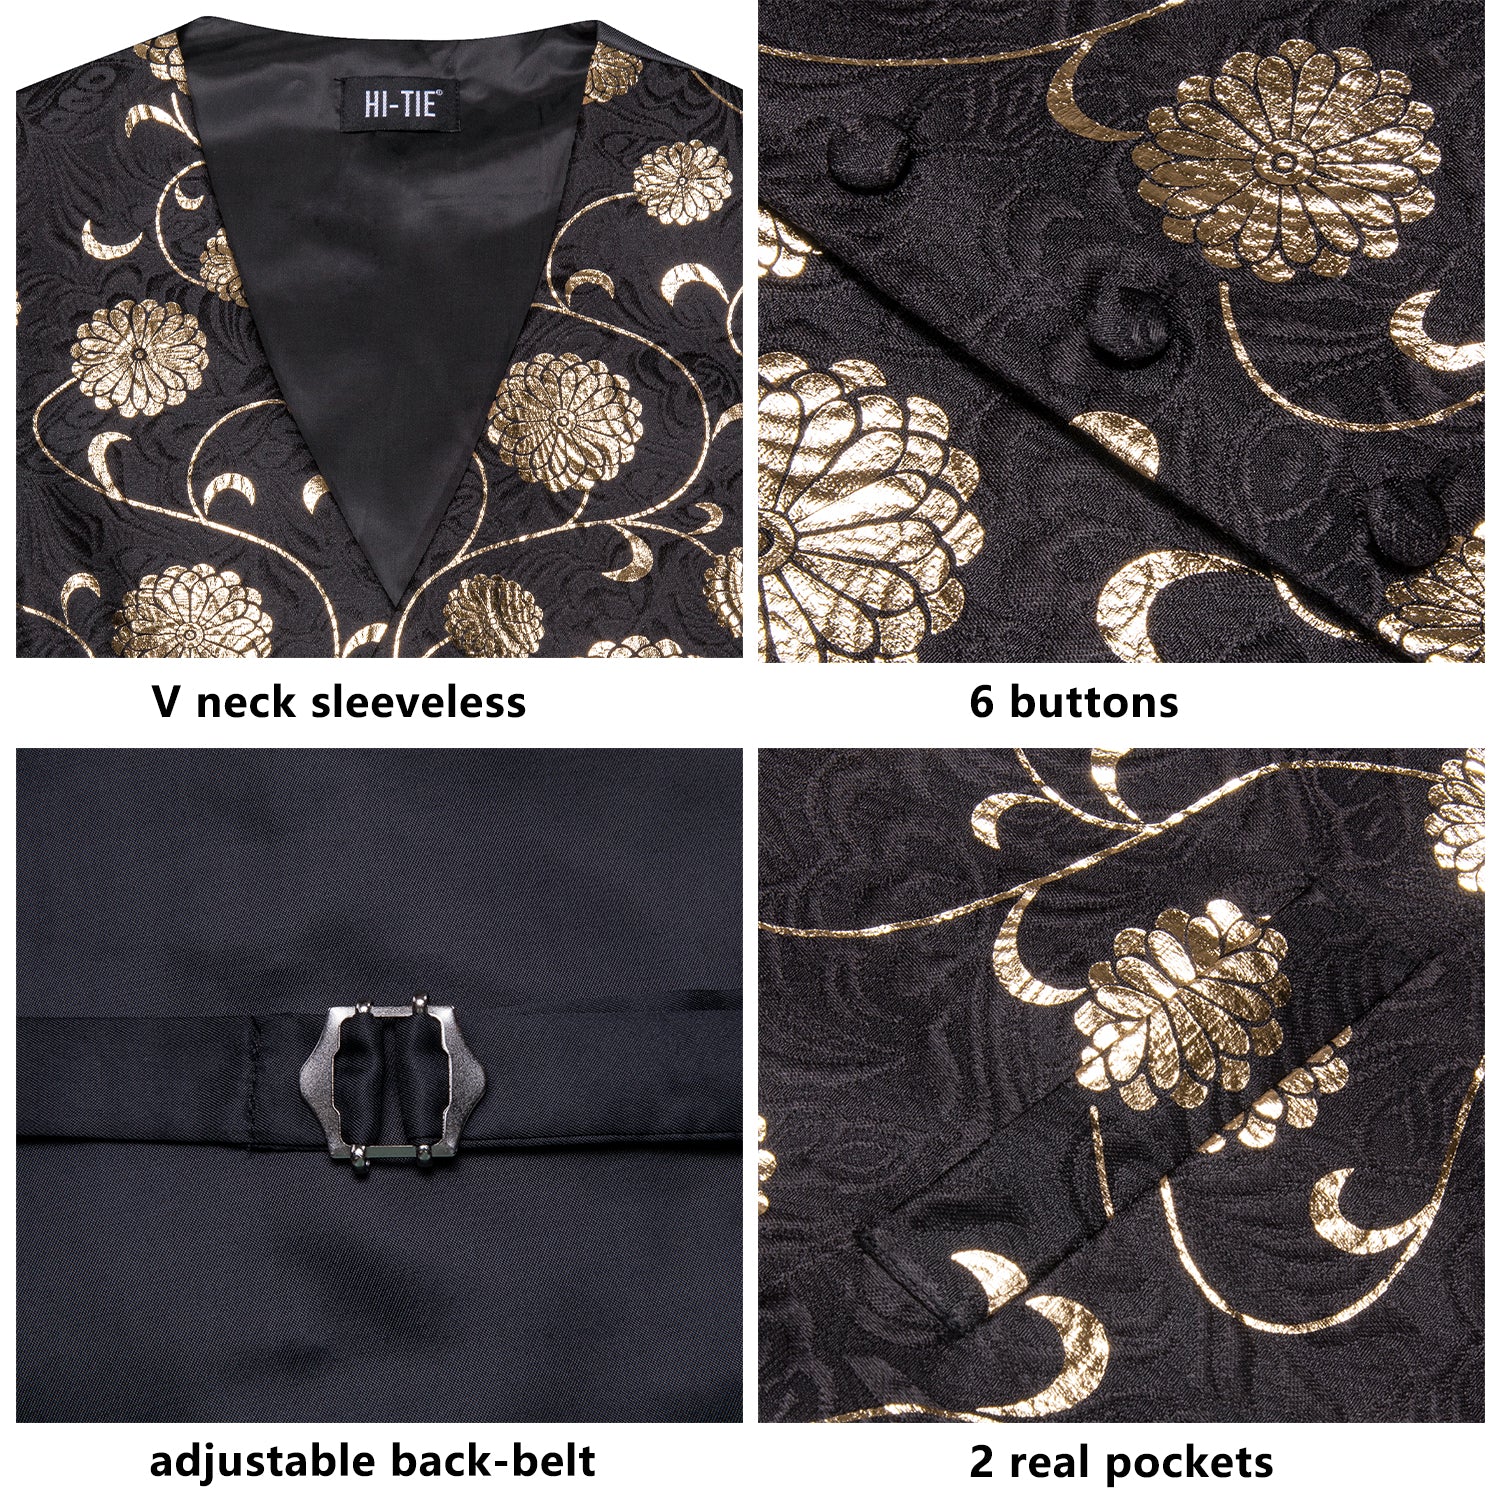 Black Champagne Floral Men's Vest Hanky Cufflinks Tie Set